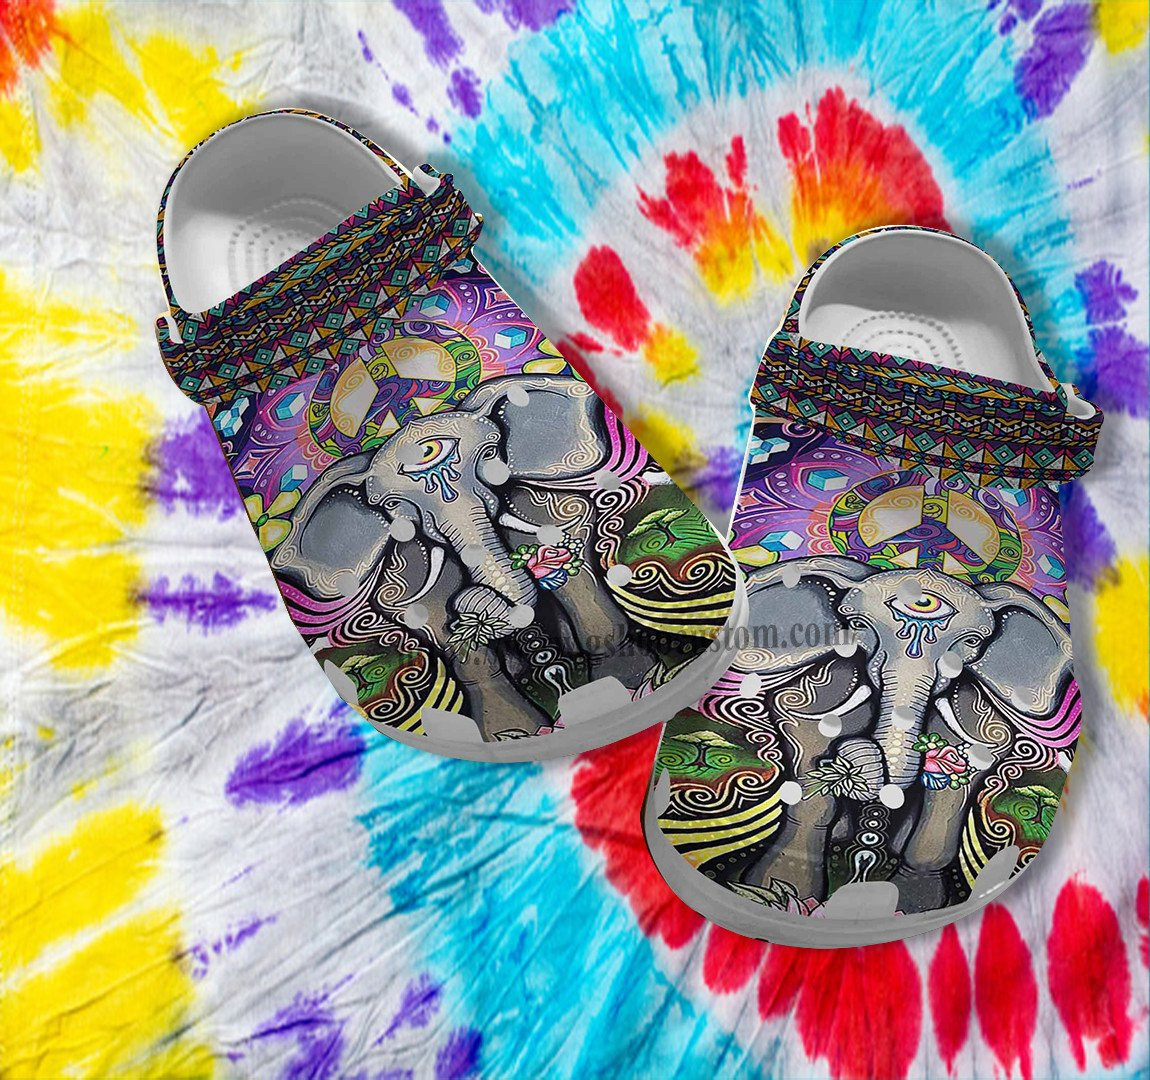 Elephant Boho Trippy Peace Croc Shoes - Hippie Peace Boho Erudite Shoes Croc Clogs Customize Gift Besties